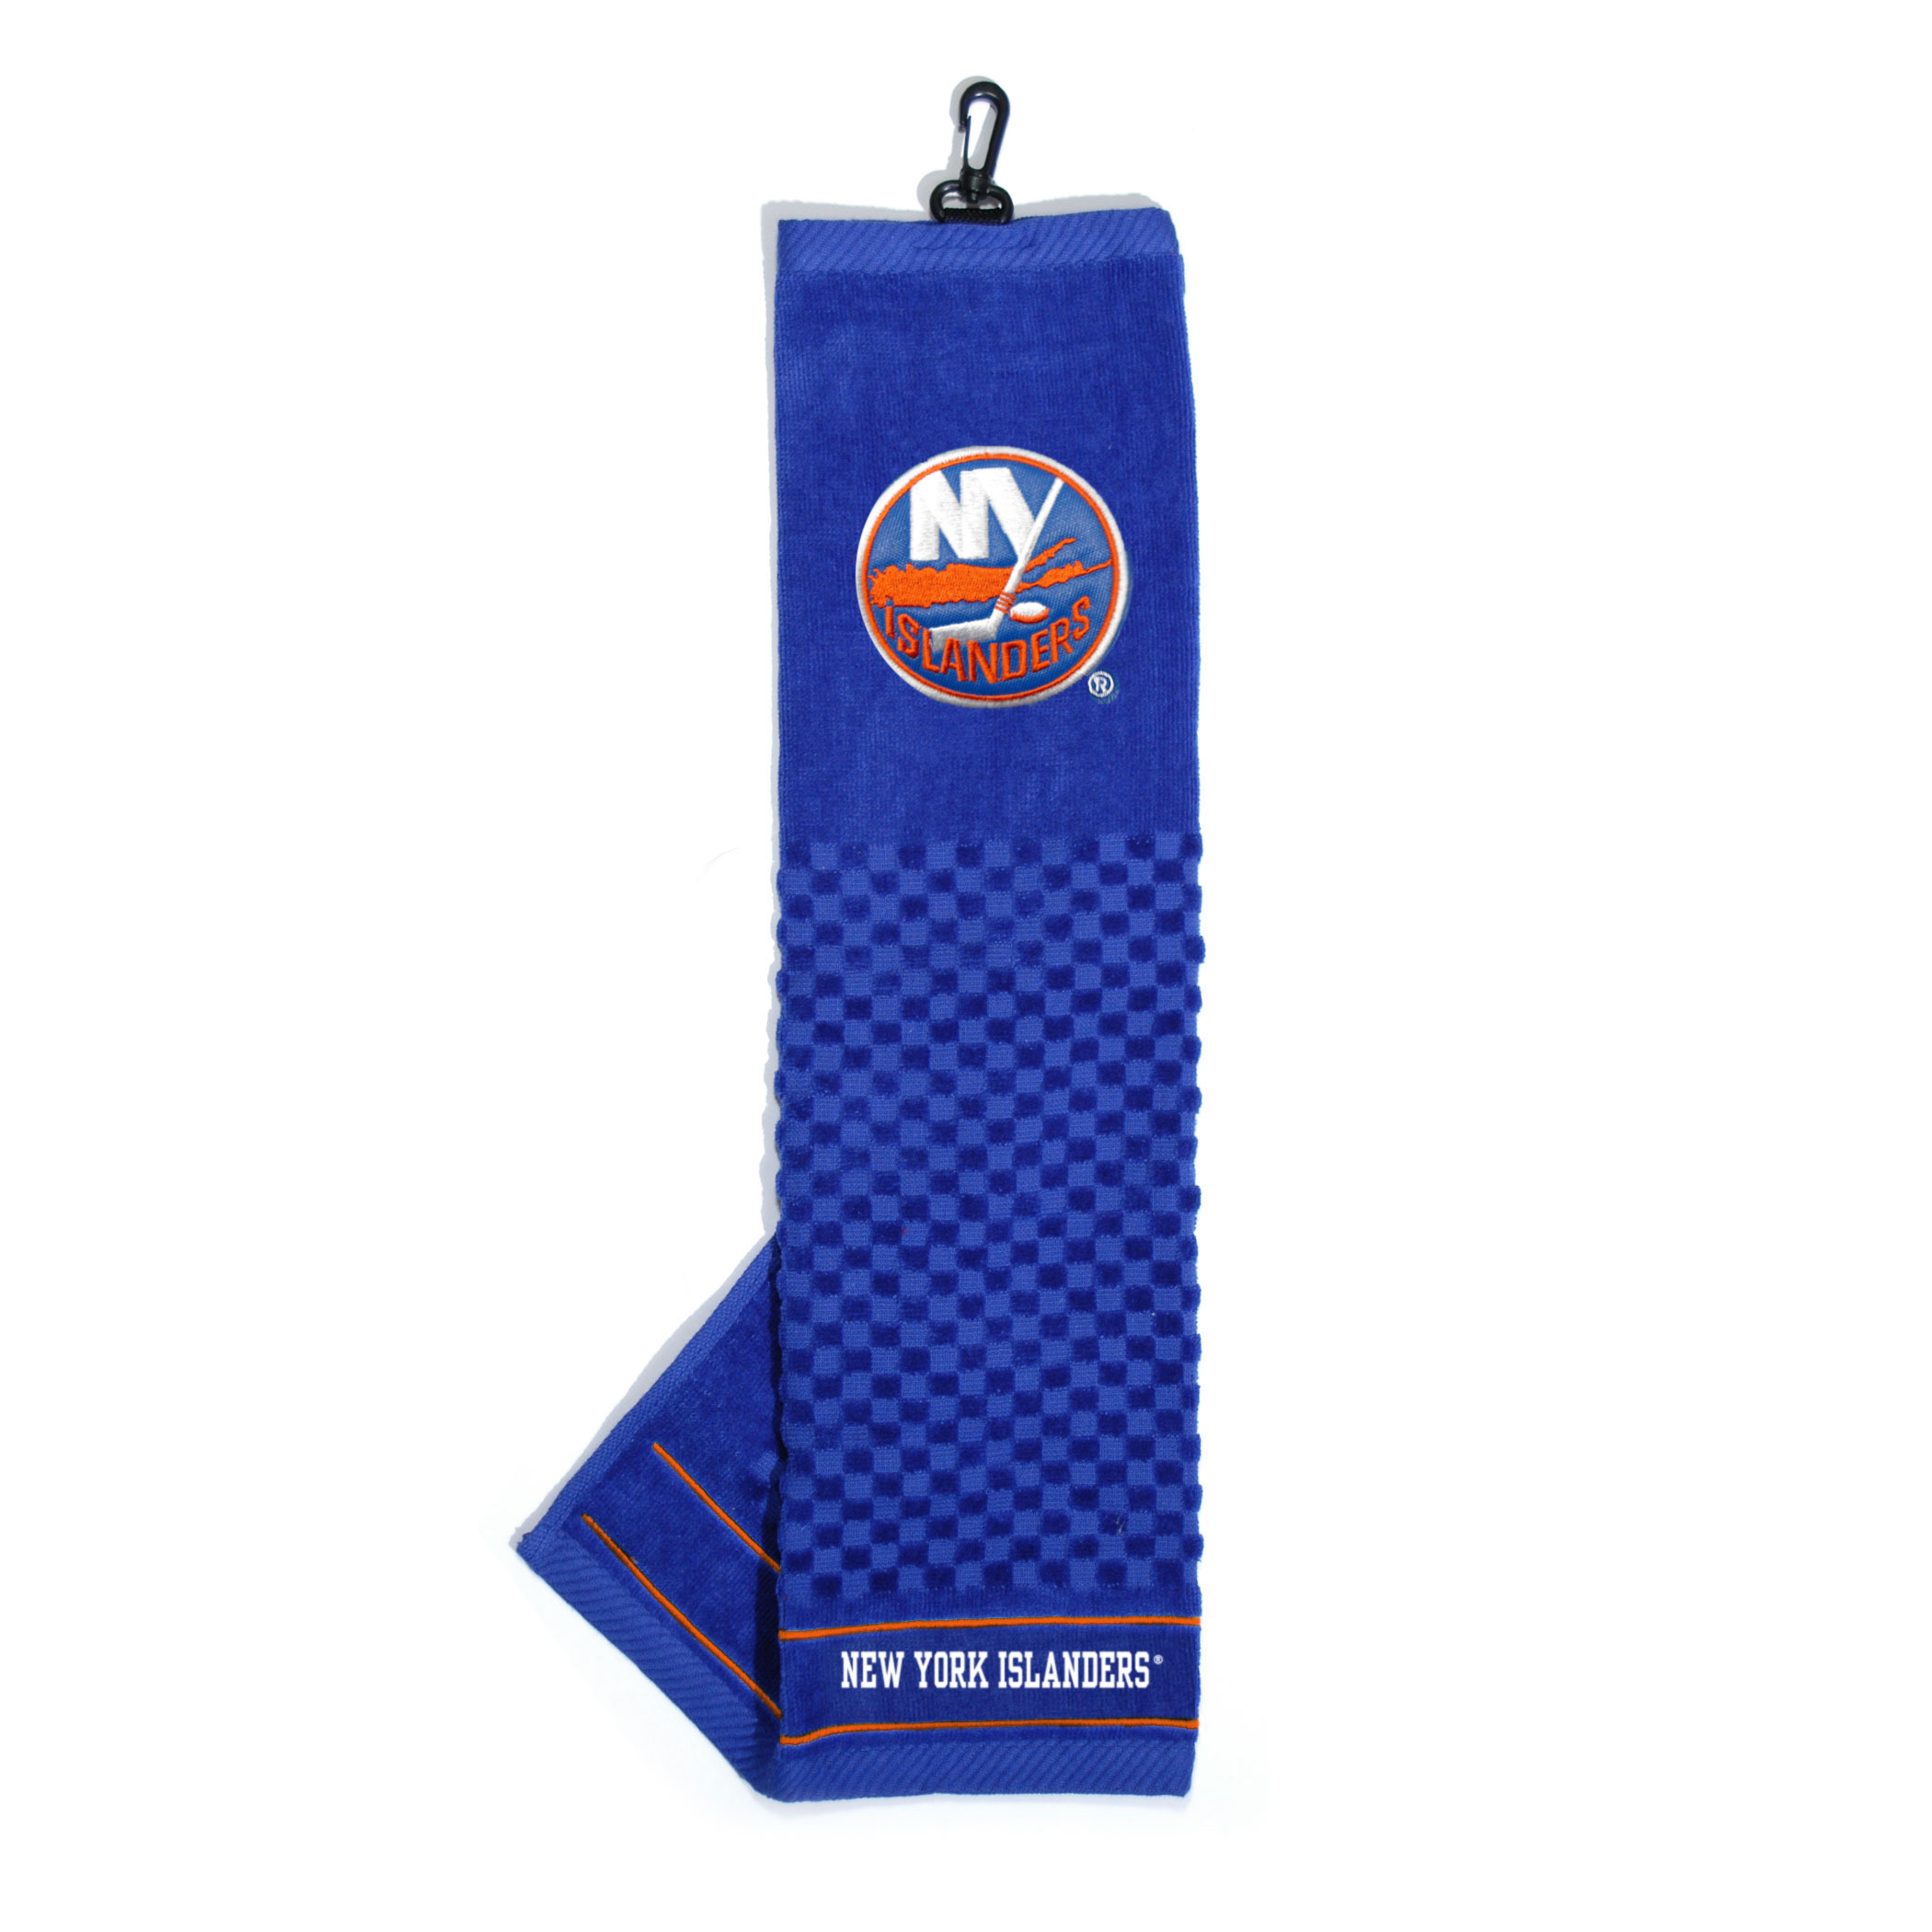 New York Islanders Embroidered Towel